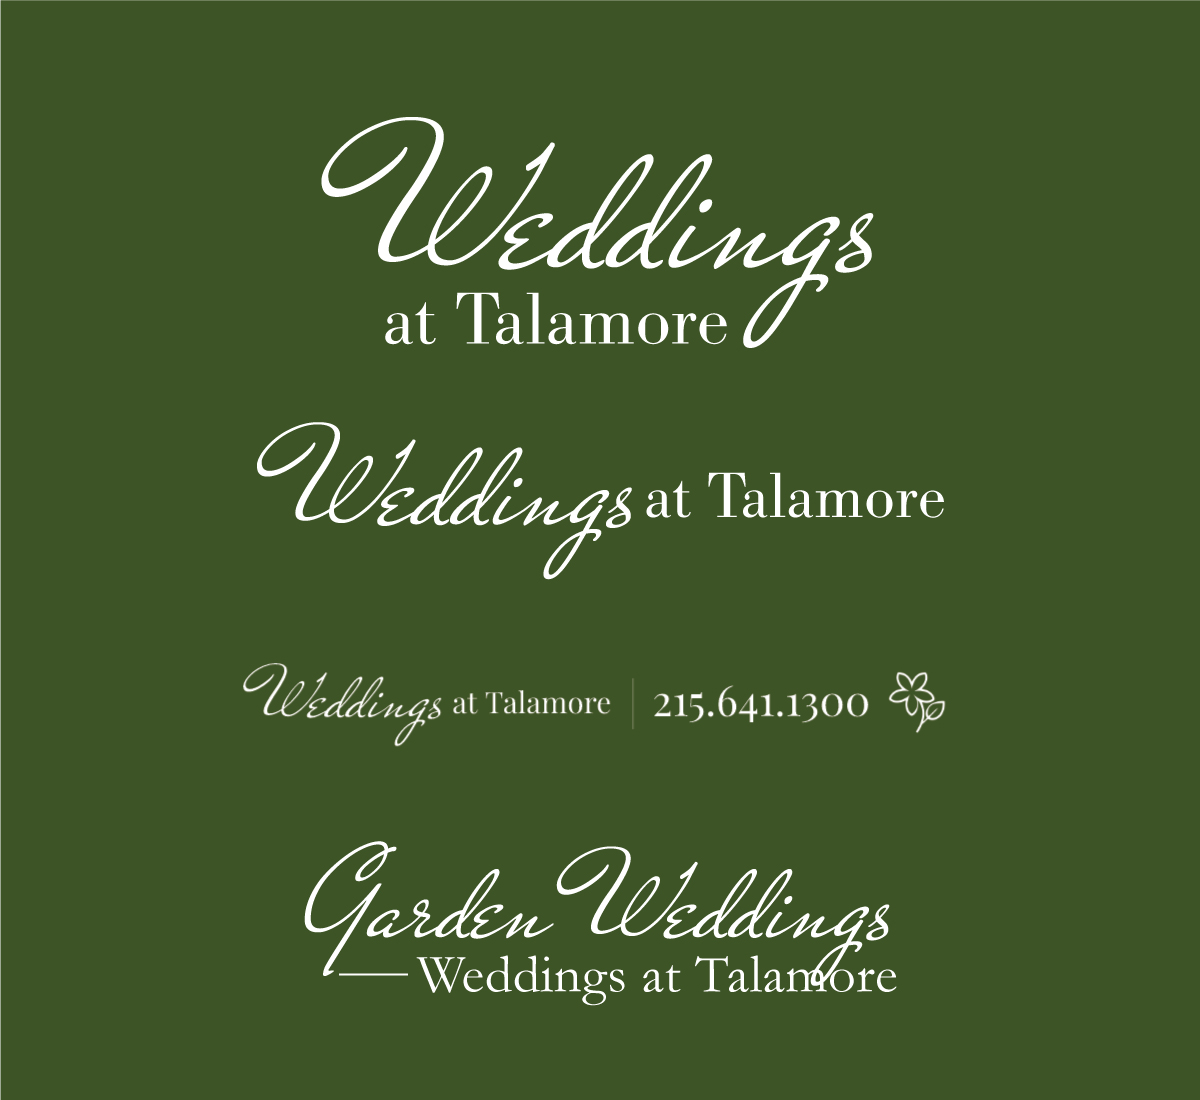 talamore weddings